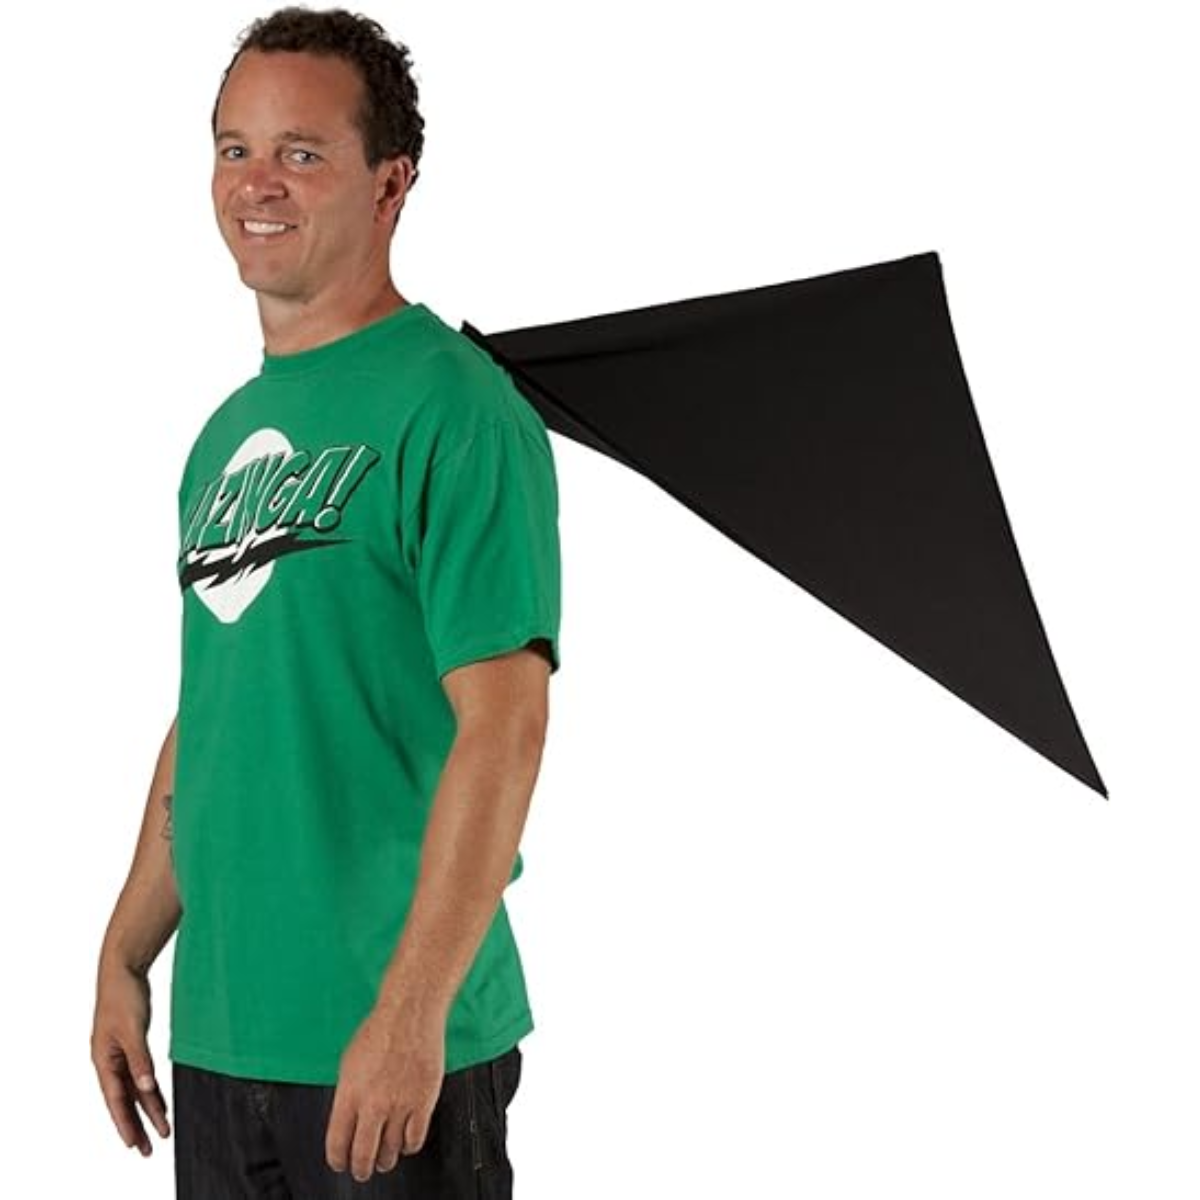 The Big Bang Theory Bazinga!! Adult t-shirt tee with Attachable Cape